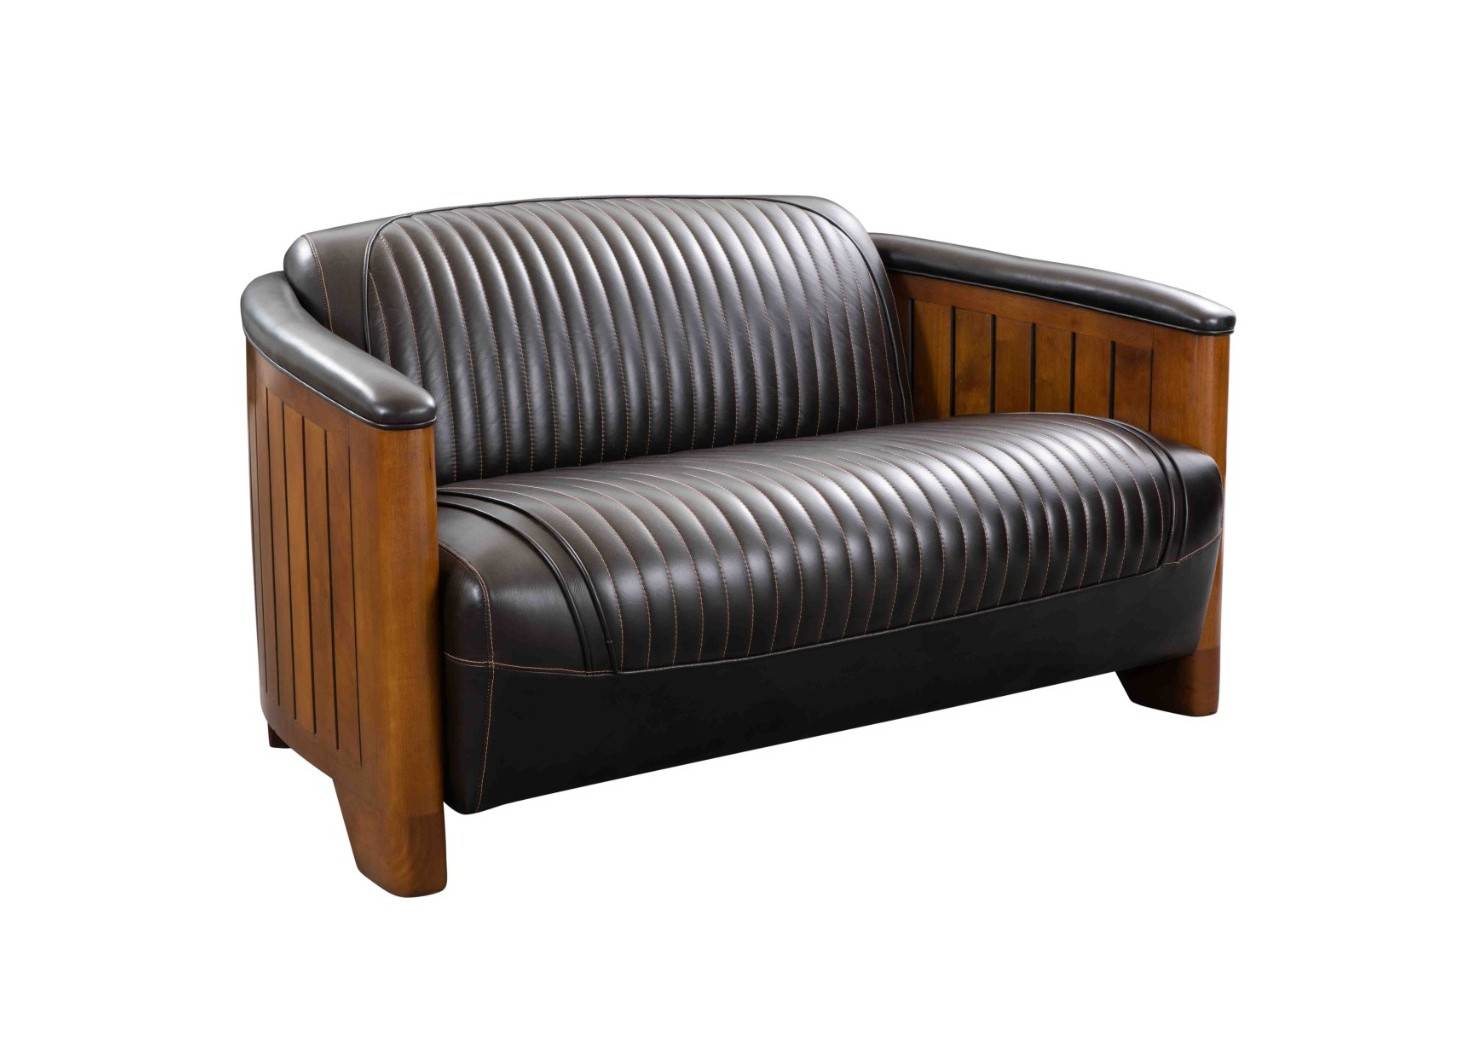 Nautical sofa in dark brown leather